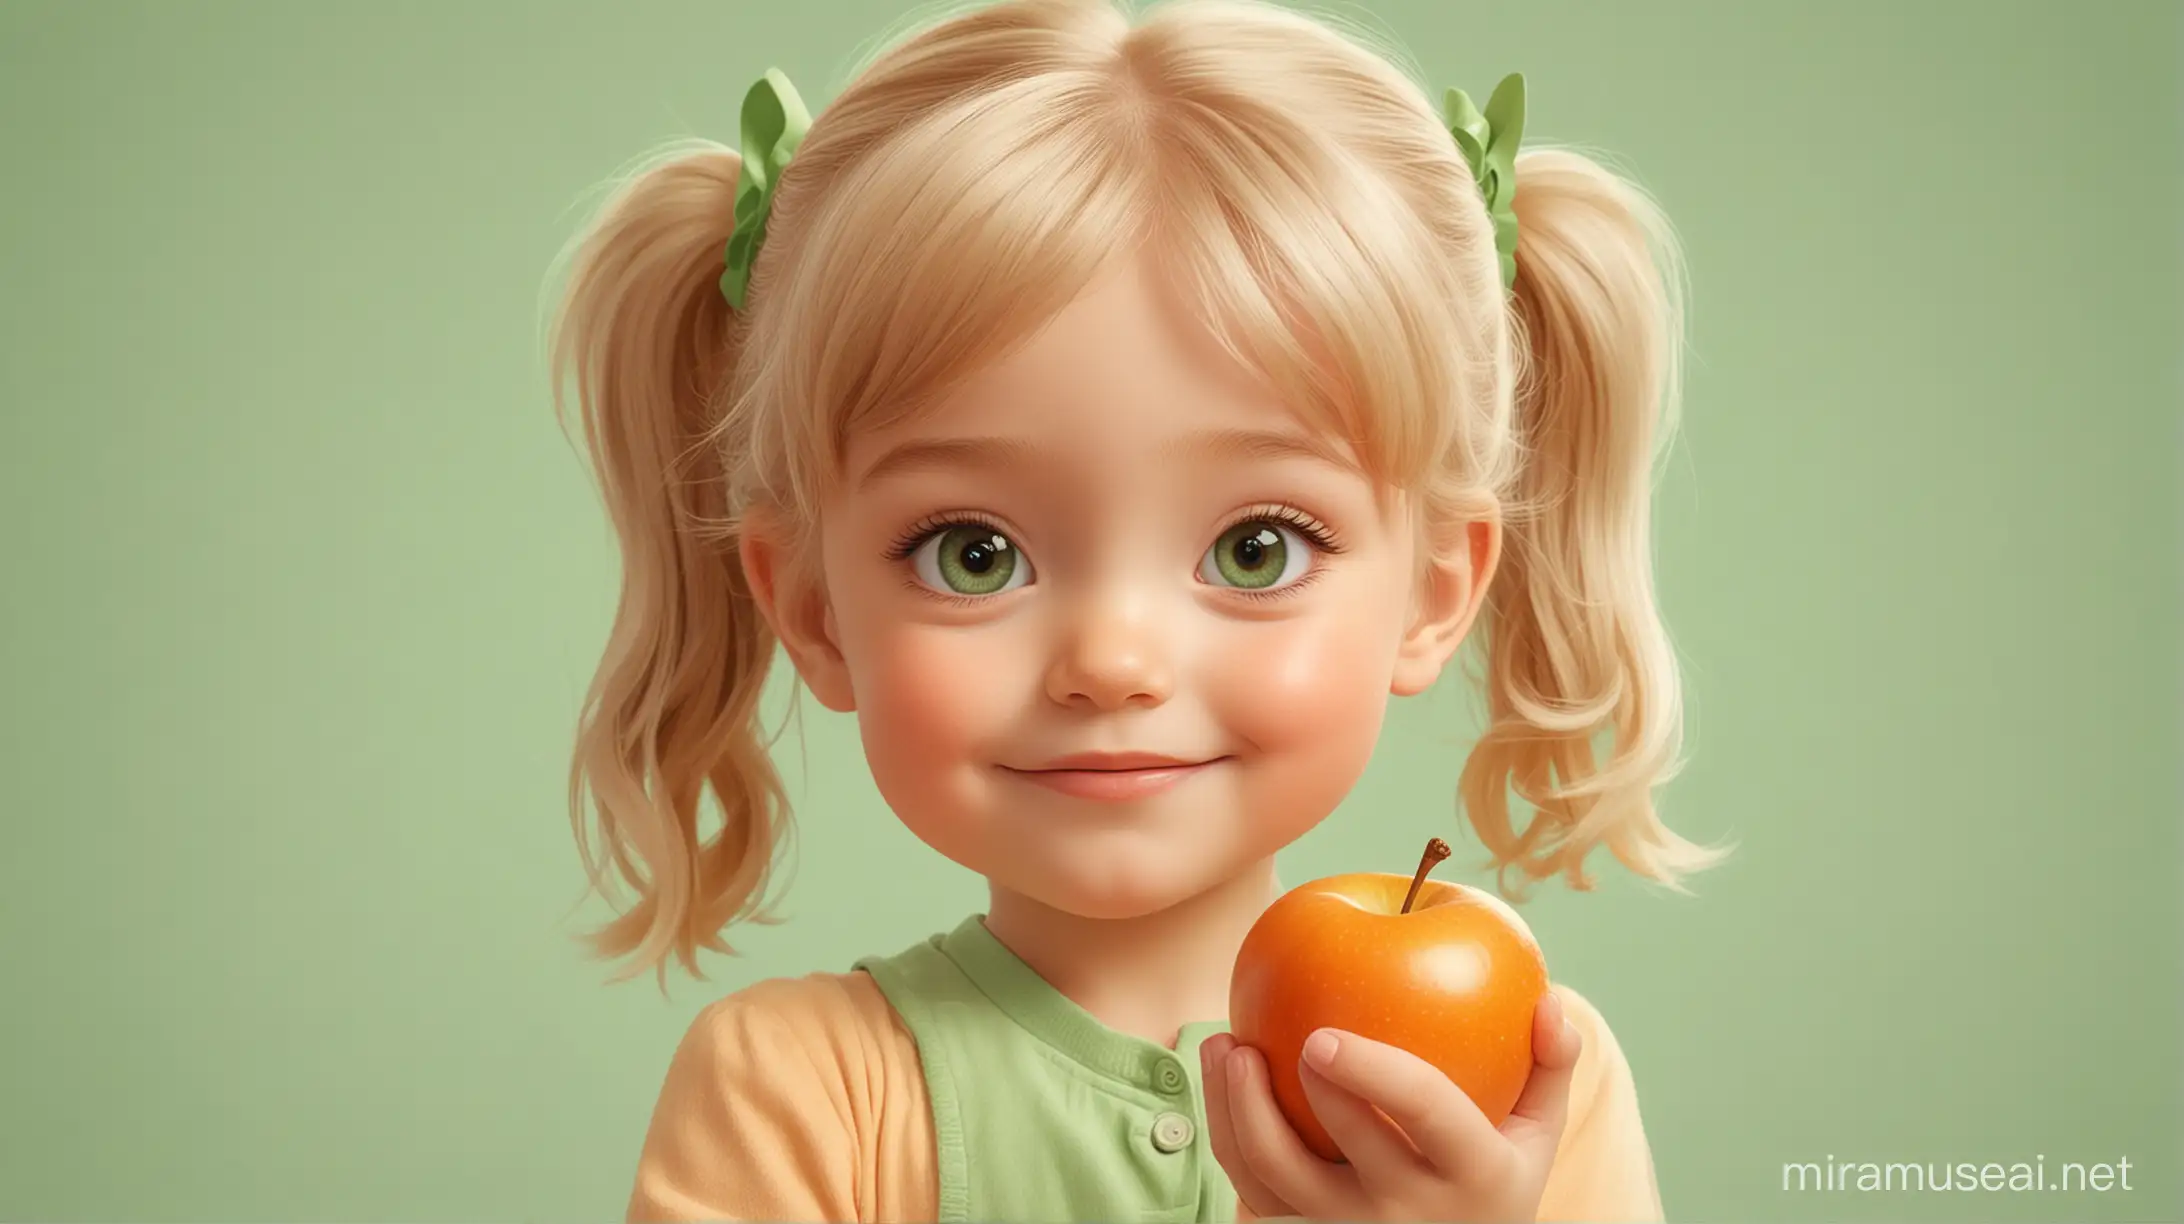 Child Holding Apple Disney Animation Style with Pastel Shades